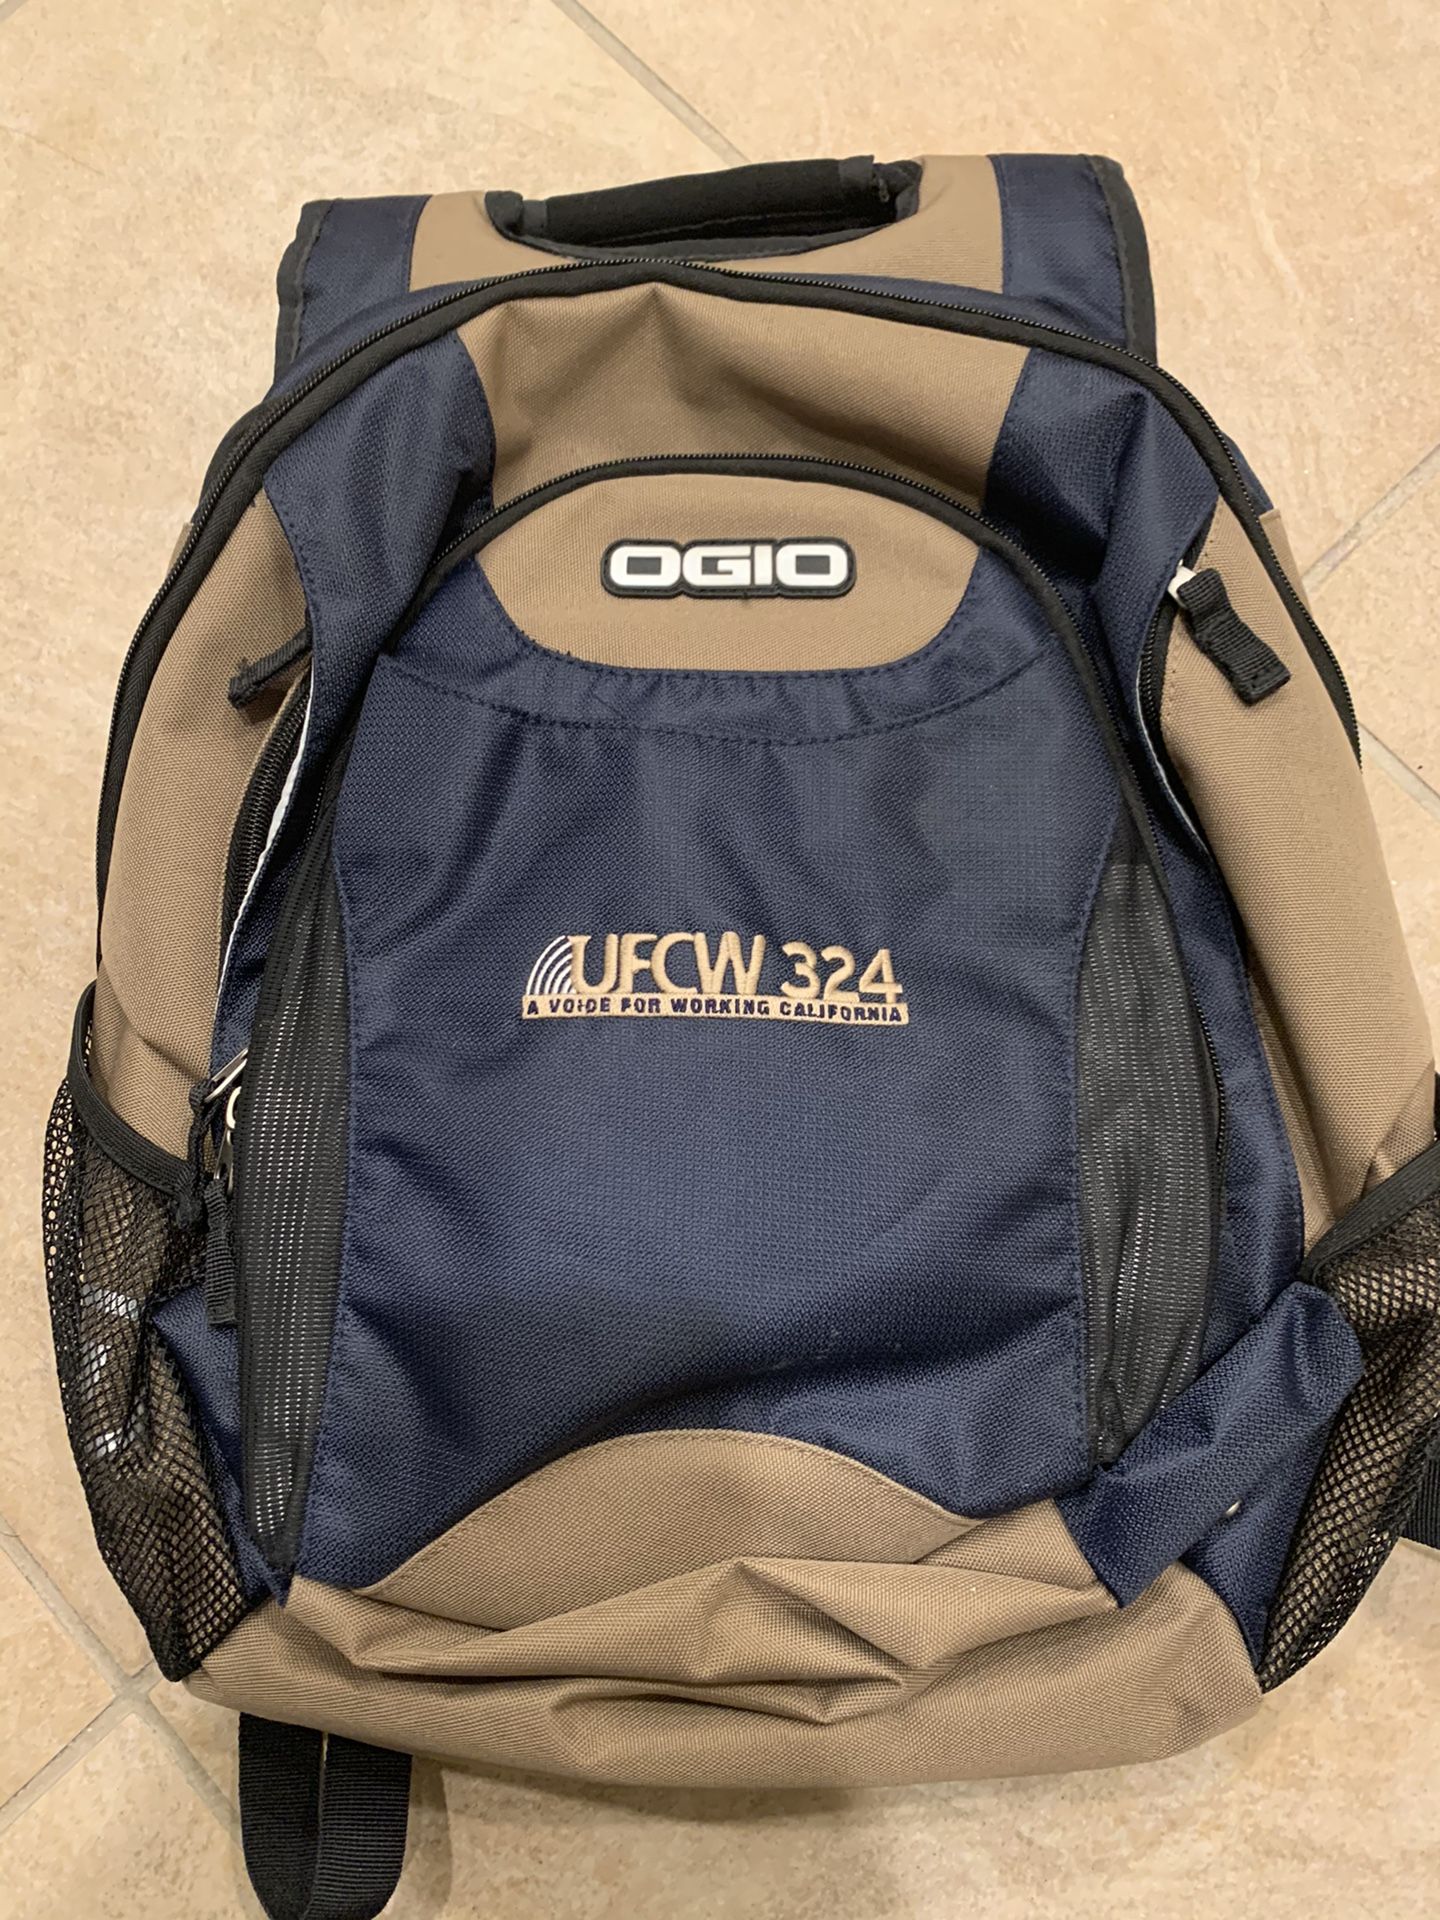 Ogio Poitan laptop backpack